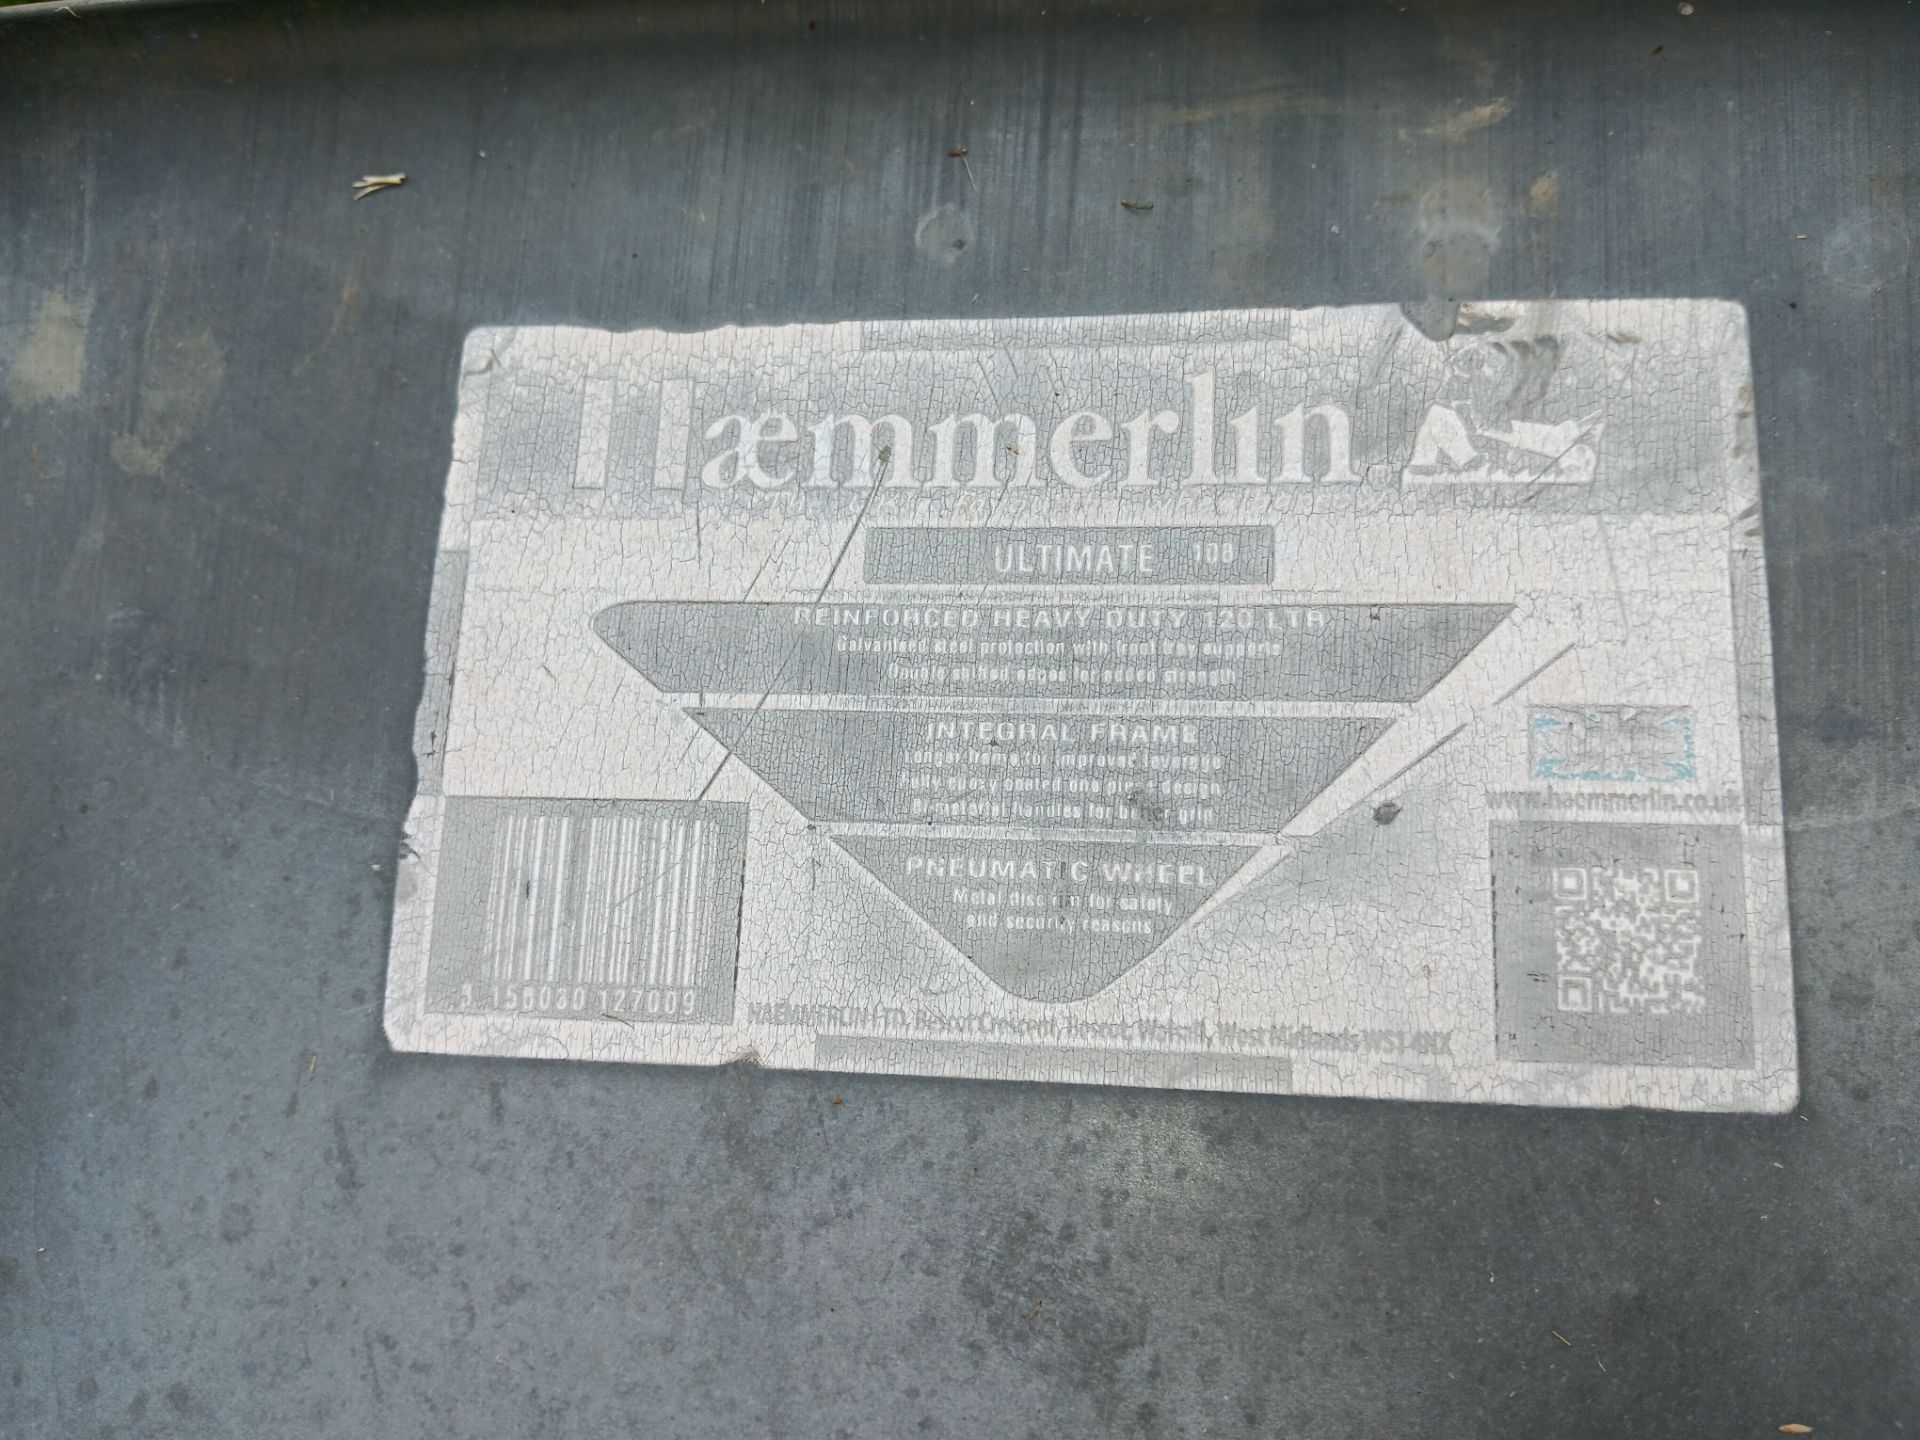 3x Haemmerlin galvanised steel wheelbarrows - Image 2 of 2